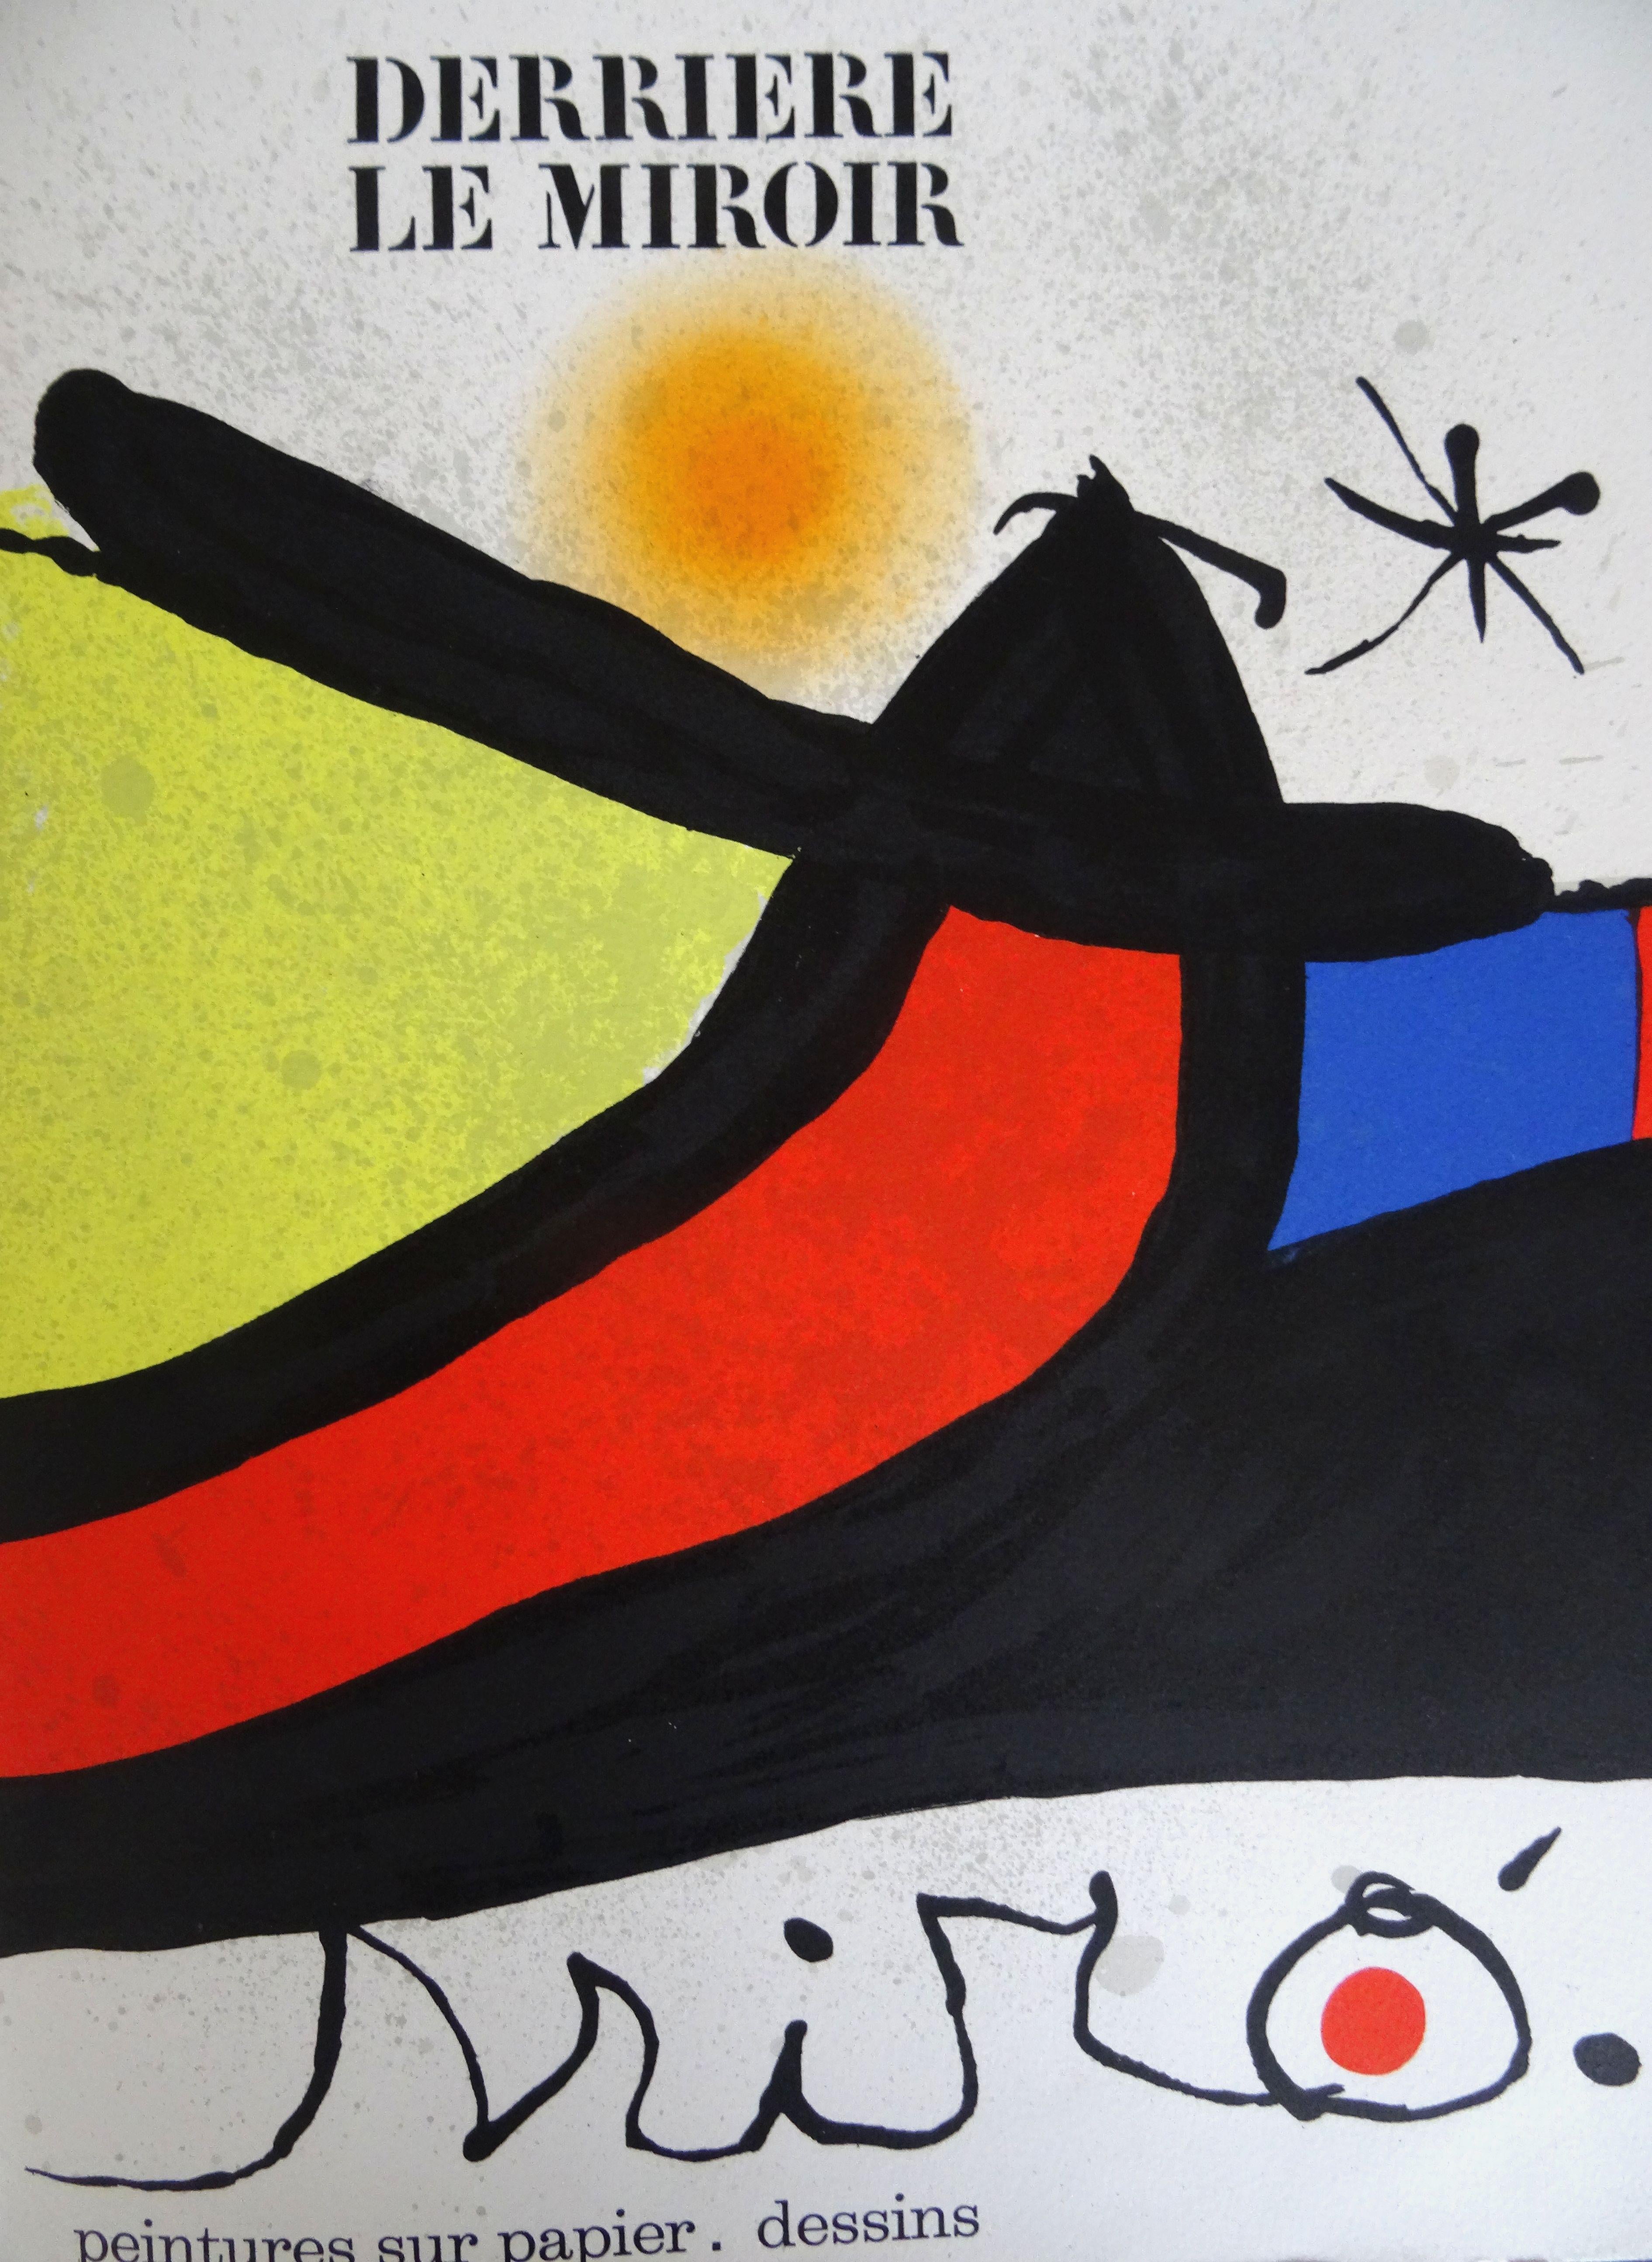 Joan Miró Abstract Print - Miro, Joan. Derriere Le Miroir, album size 39x29 cm instance nr. 62